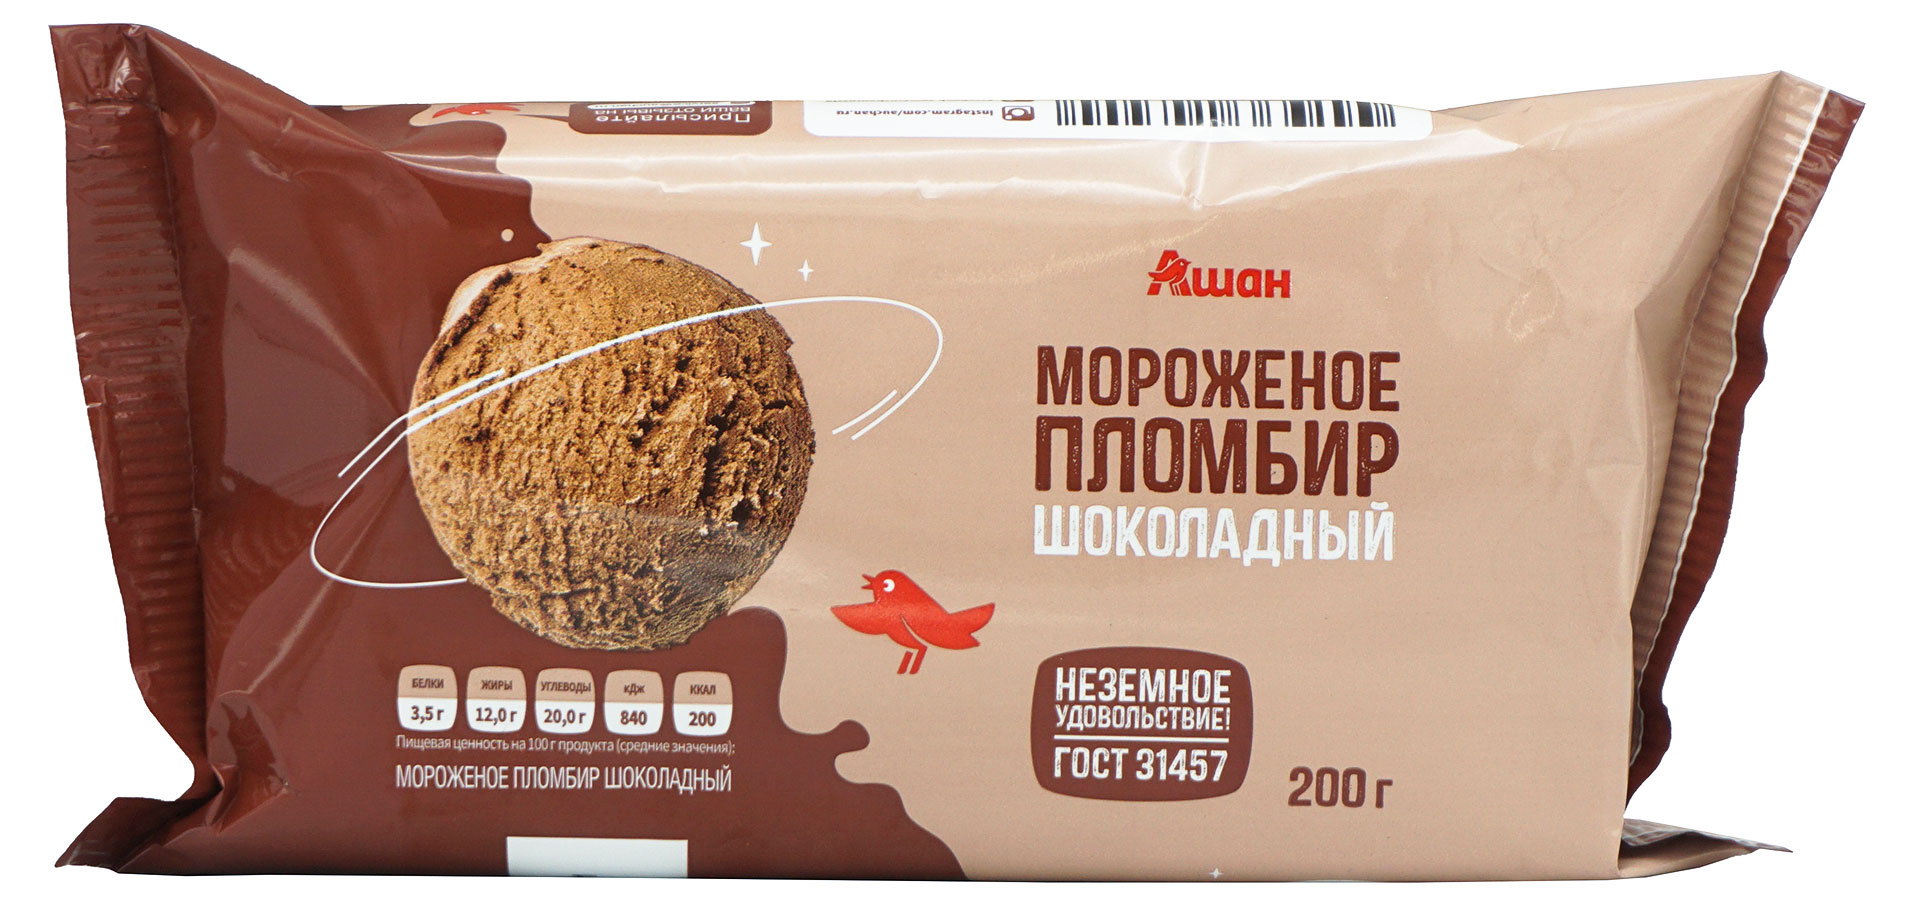 Мороженое пломбир АШАН Красная птица шоколадный БЗМЖ, 200 г